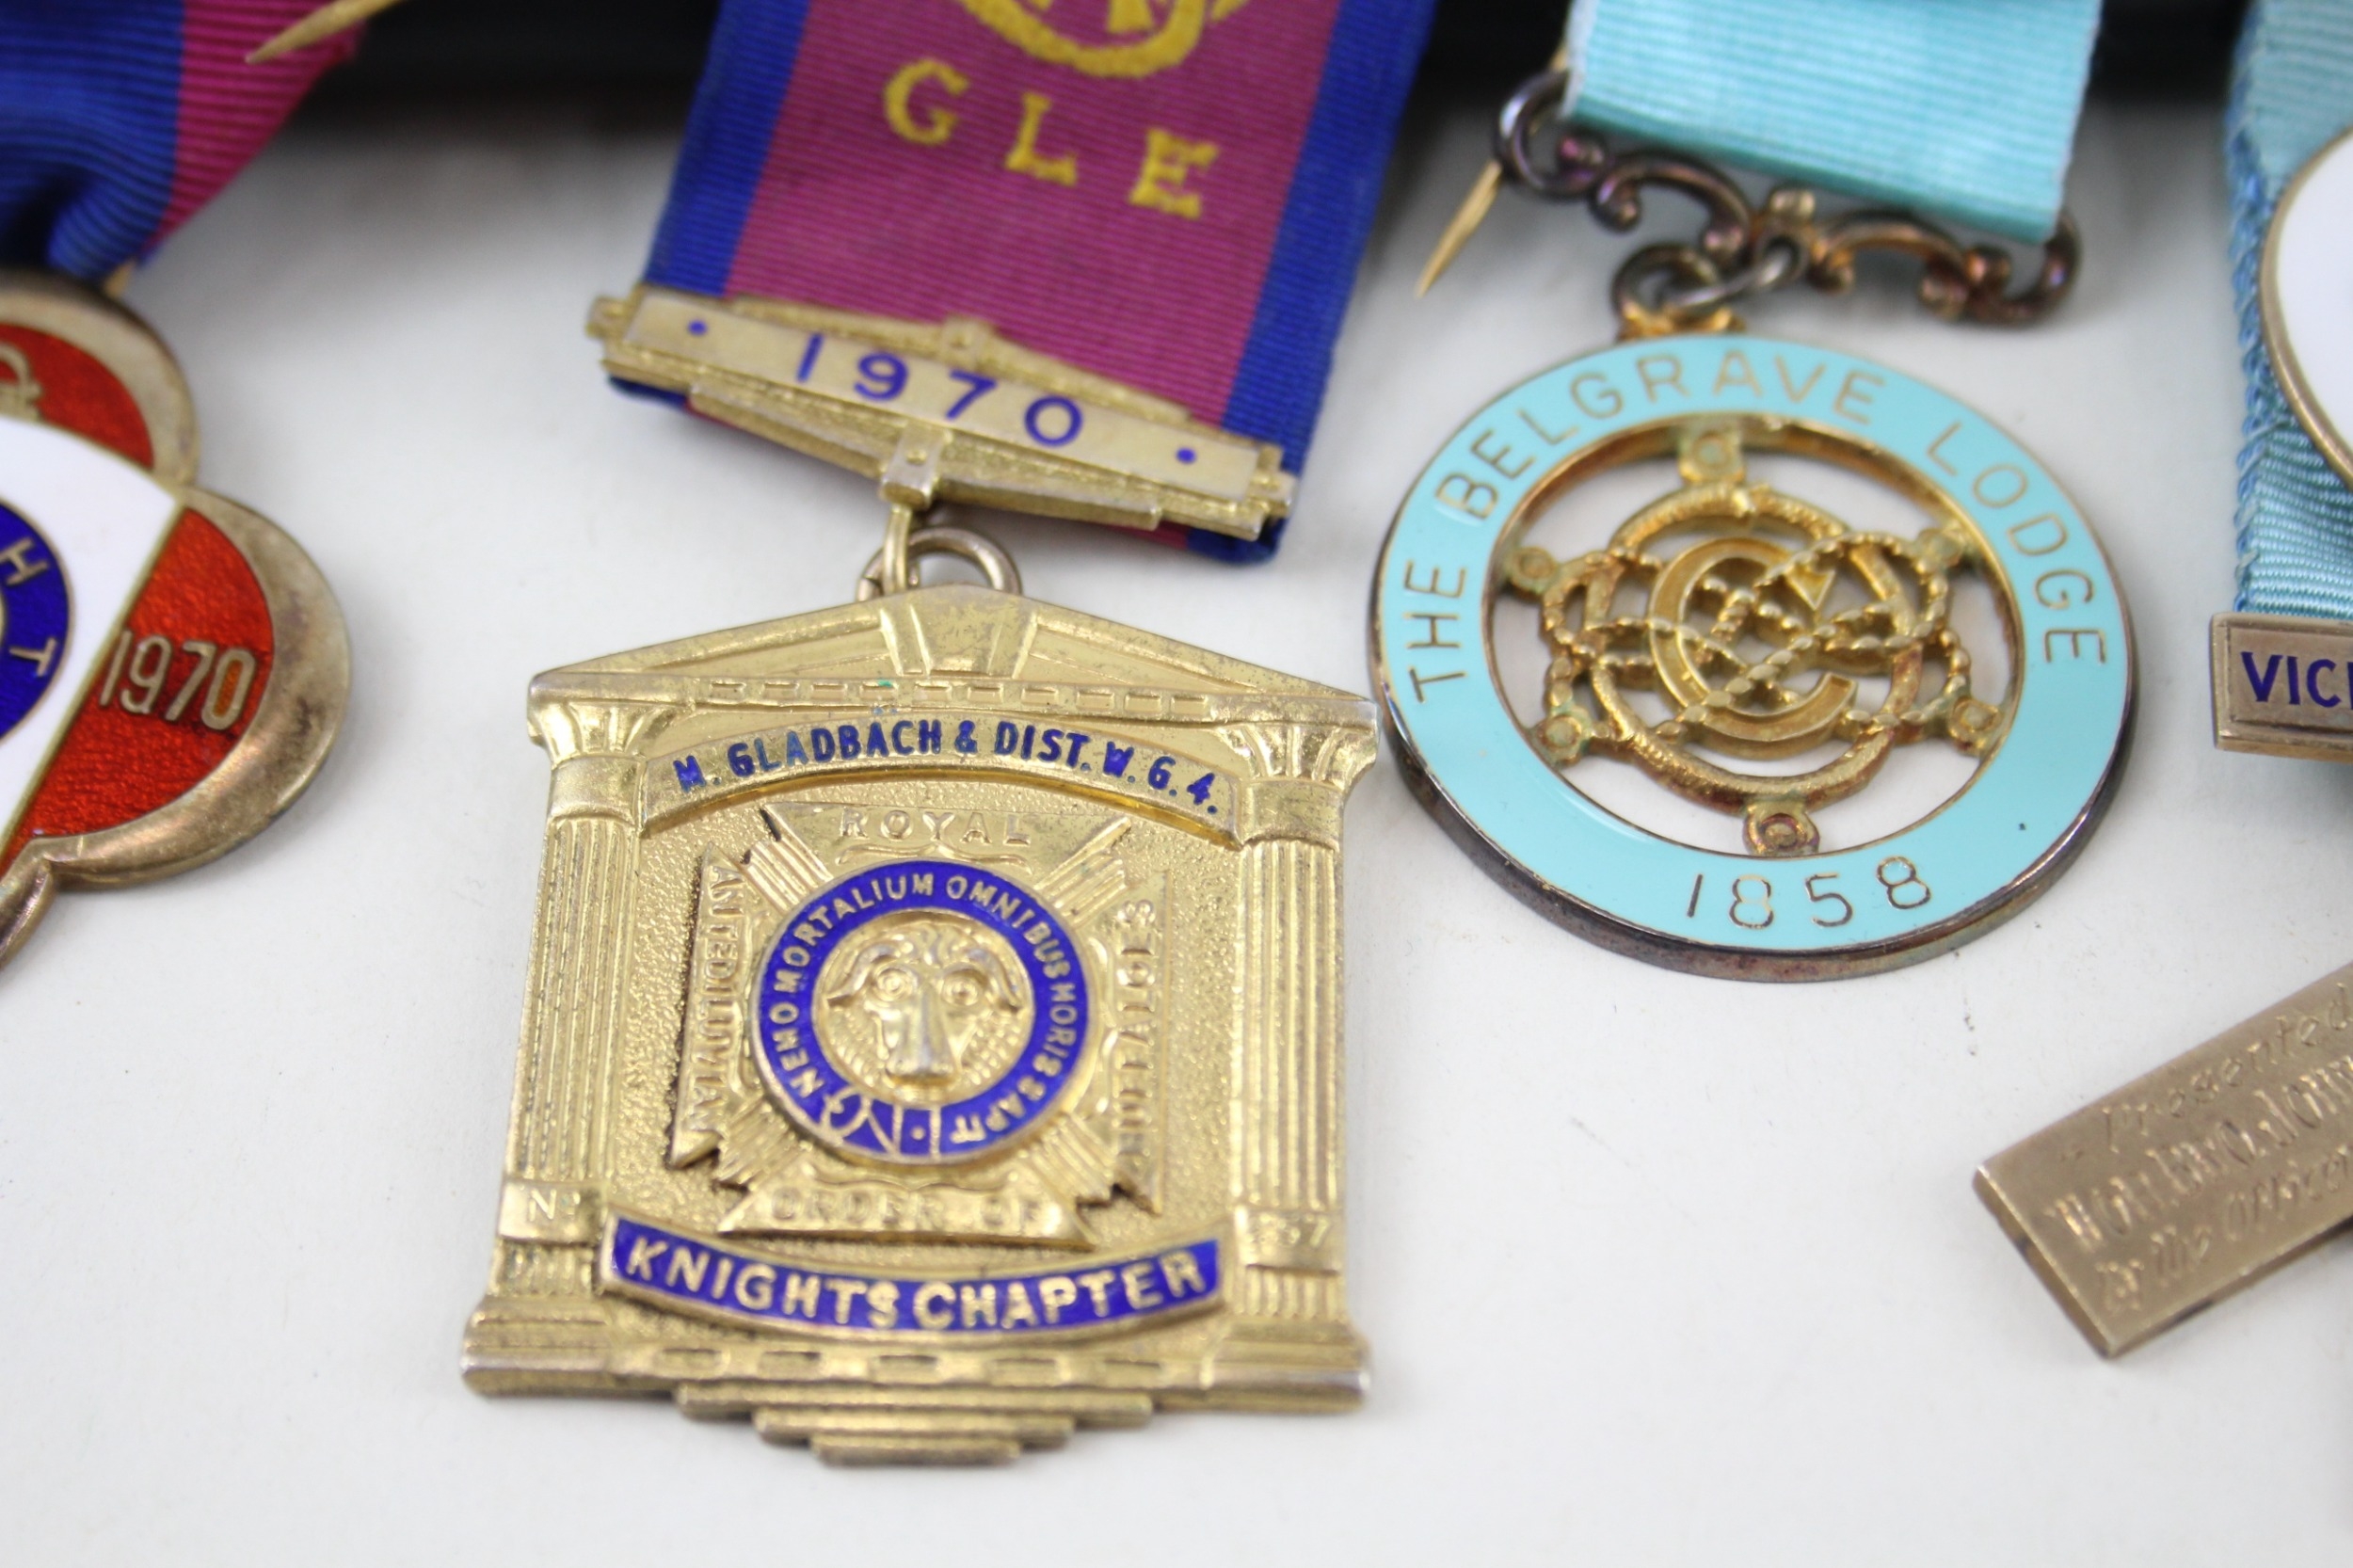 Sterling Silver Masonic R.A.O.B Jewels x 4 inc. Belgrave Lodge 123g - Image 4 of 7